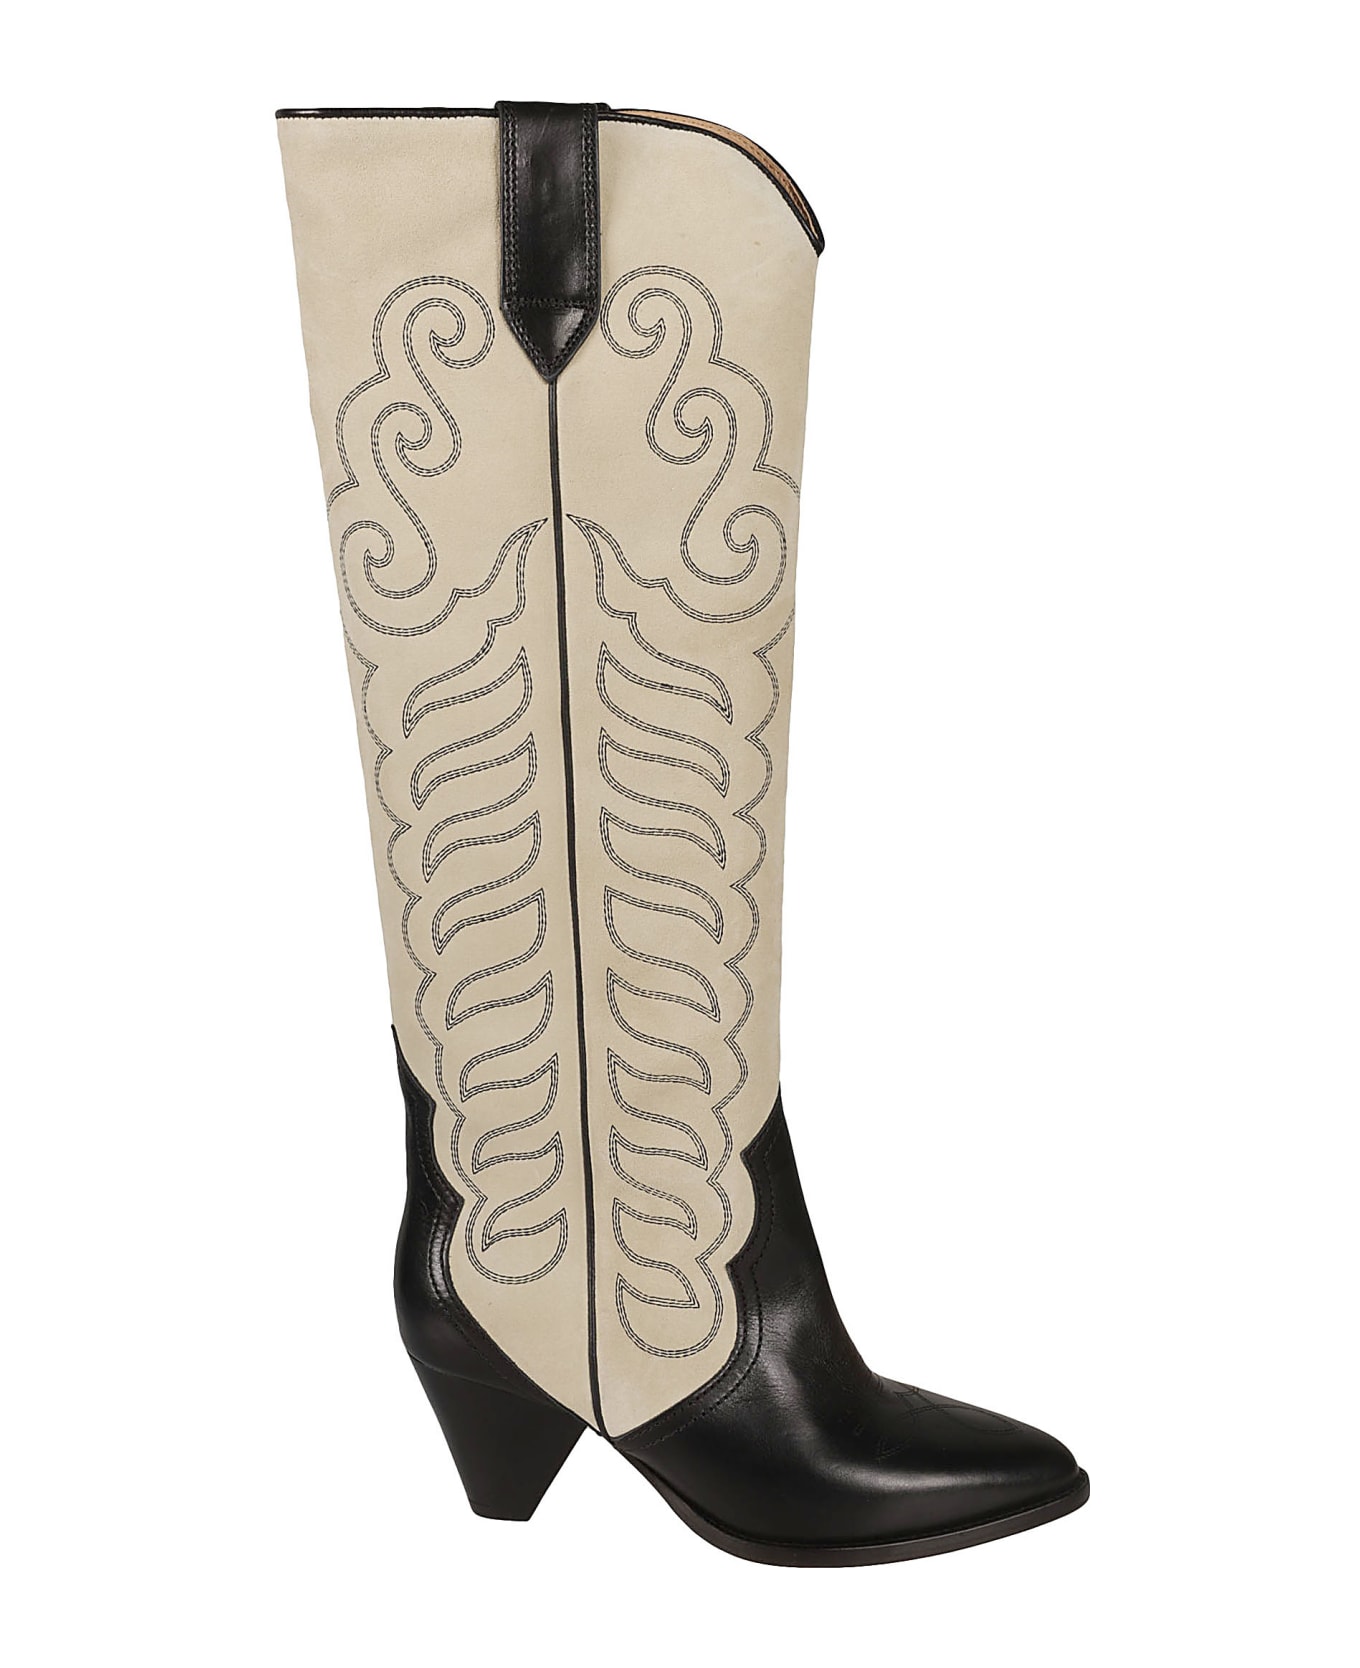 Isabel Marant San Embroidered Boots - Black/Ecru